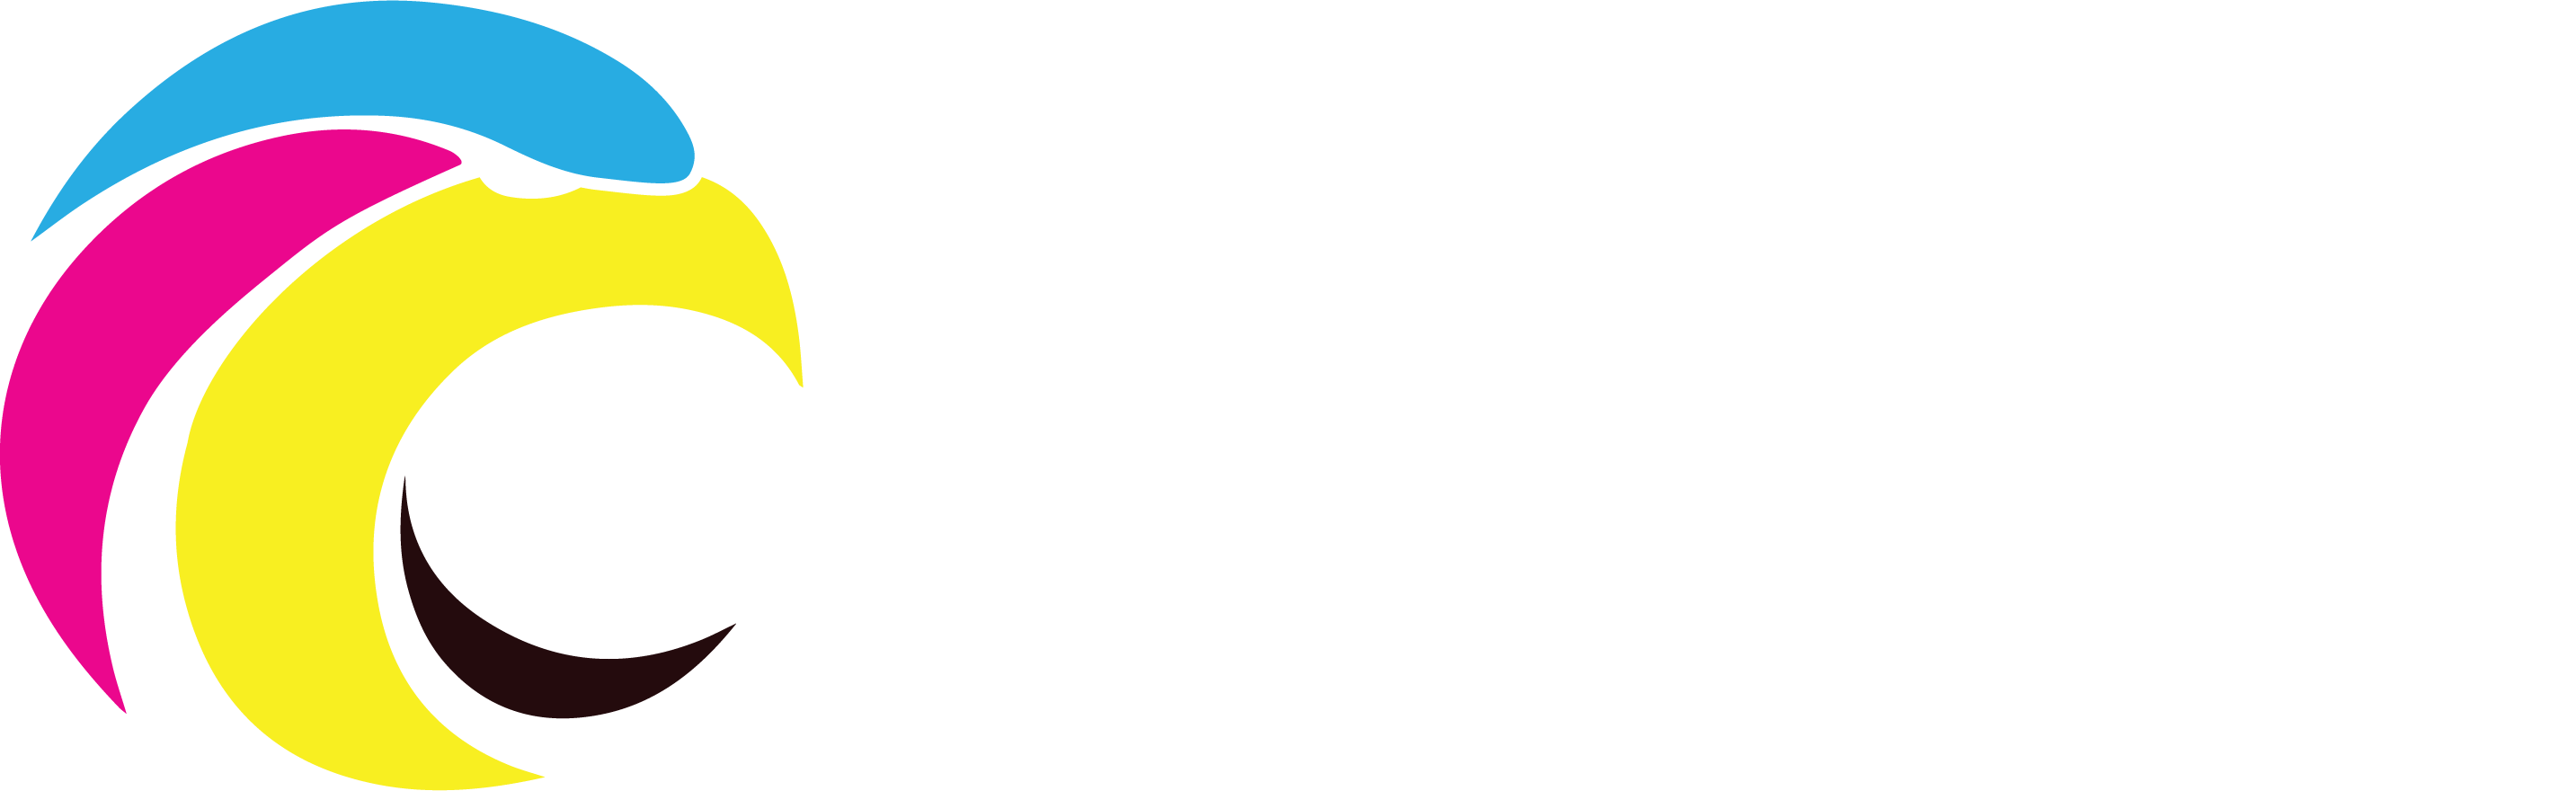 Print Your Brands White Logo